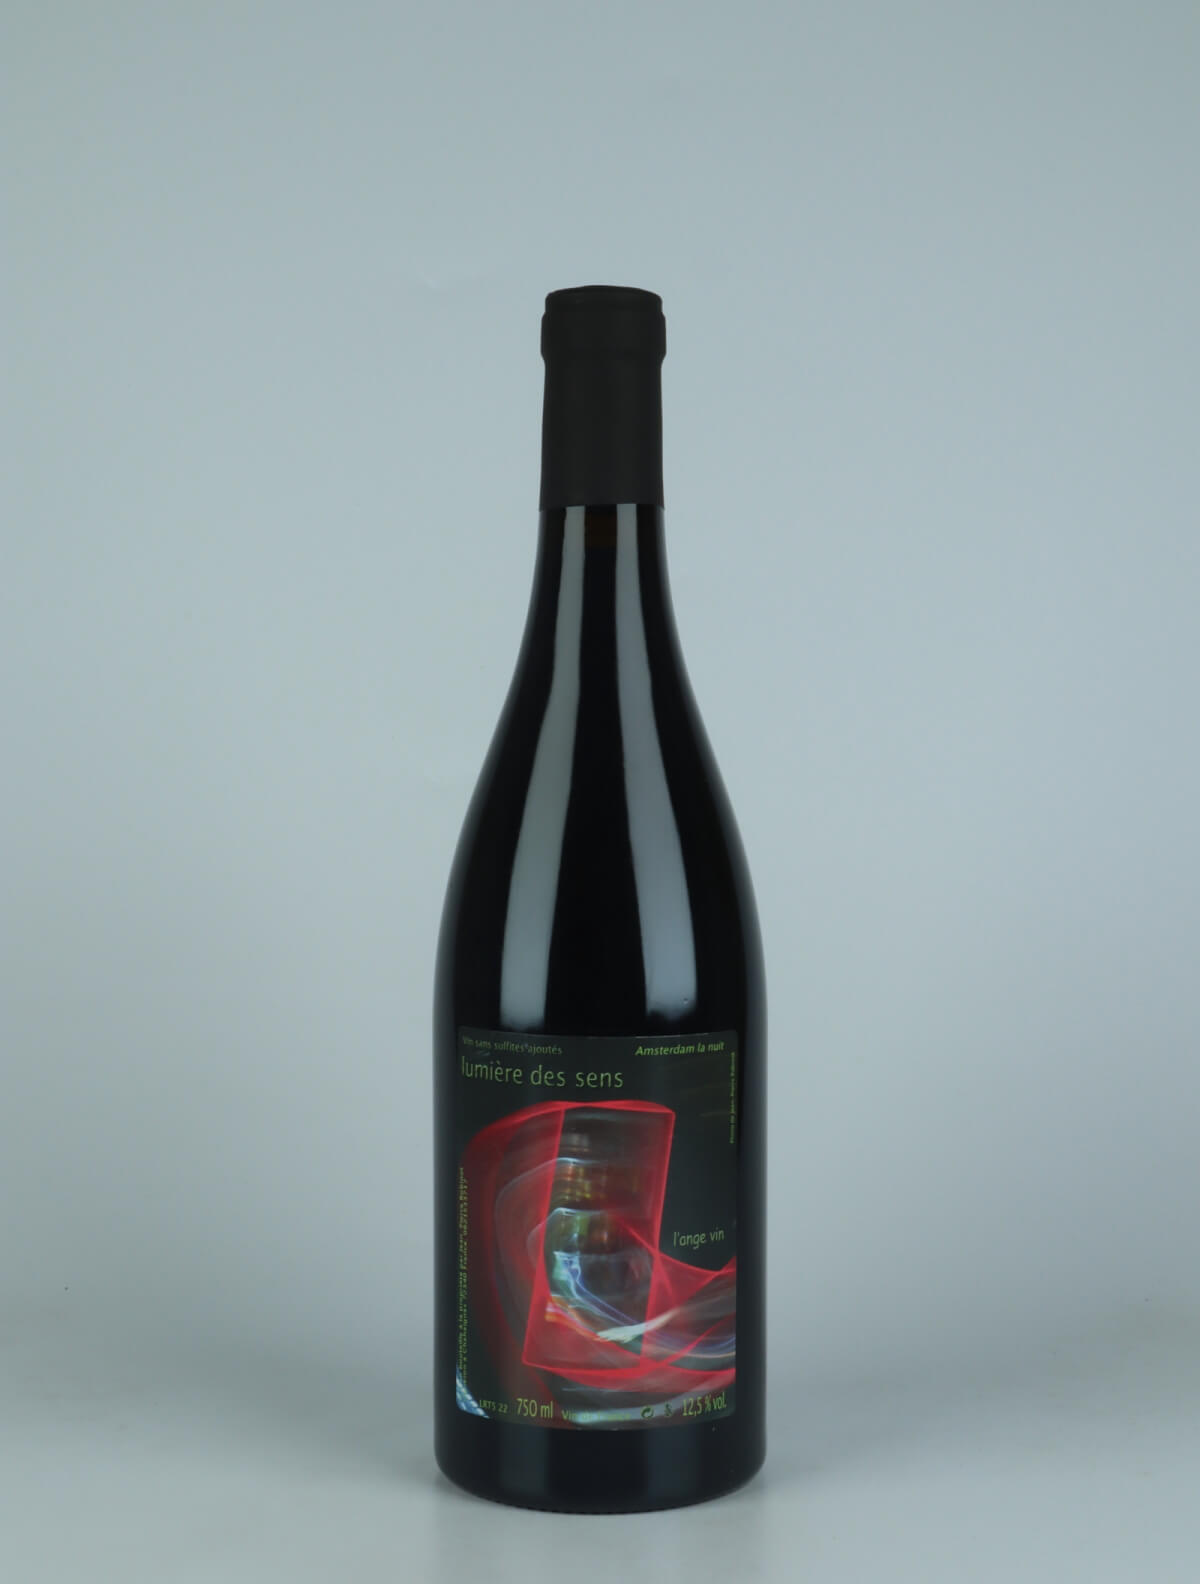 A bottle 2022 Lumière des Sens Red wine from Jean-Pierre Robinot, Loire in France